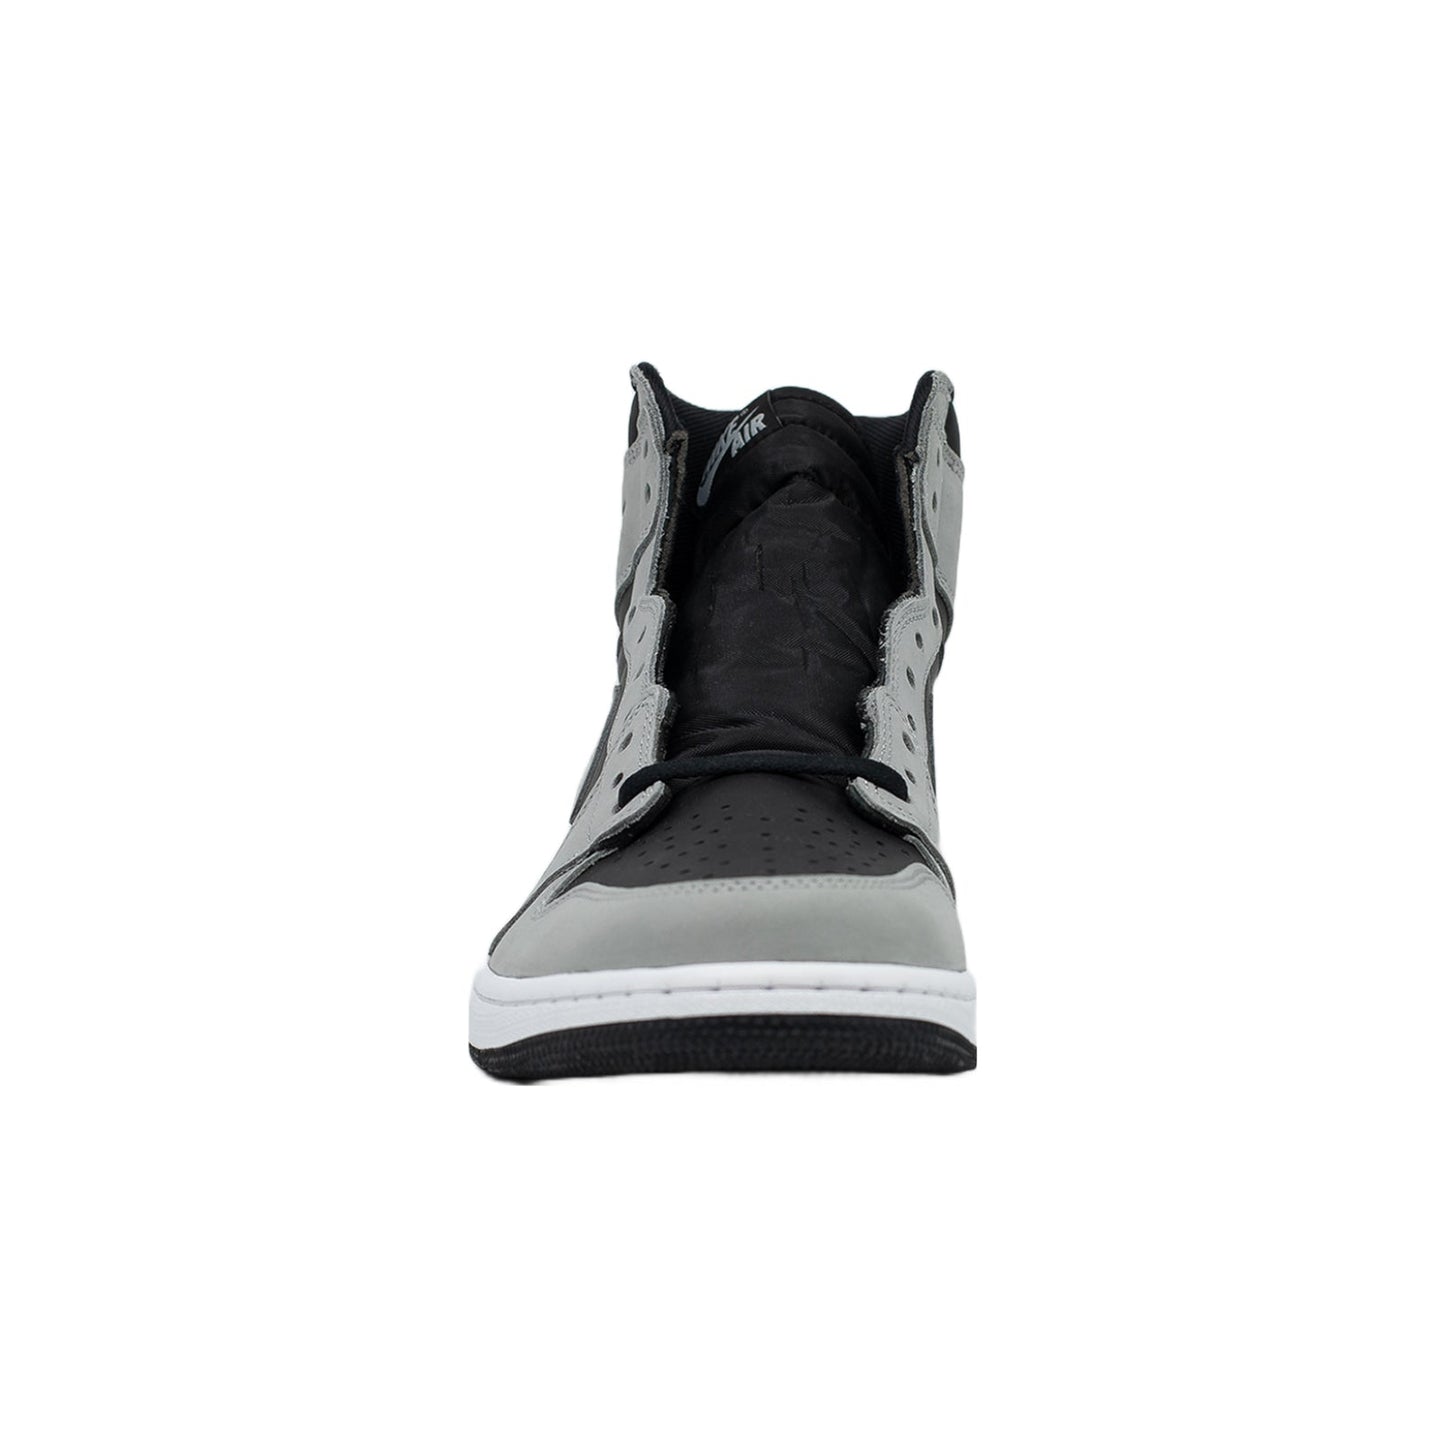 Air Air Jordan 1 Retro High OG Banned Black White Red Toe Basketball Sneakers OG Washed Heritage Releasing June 10th